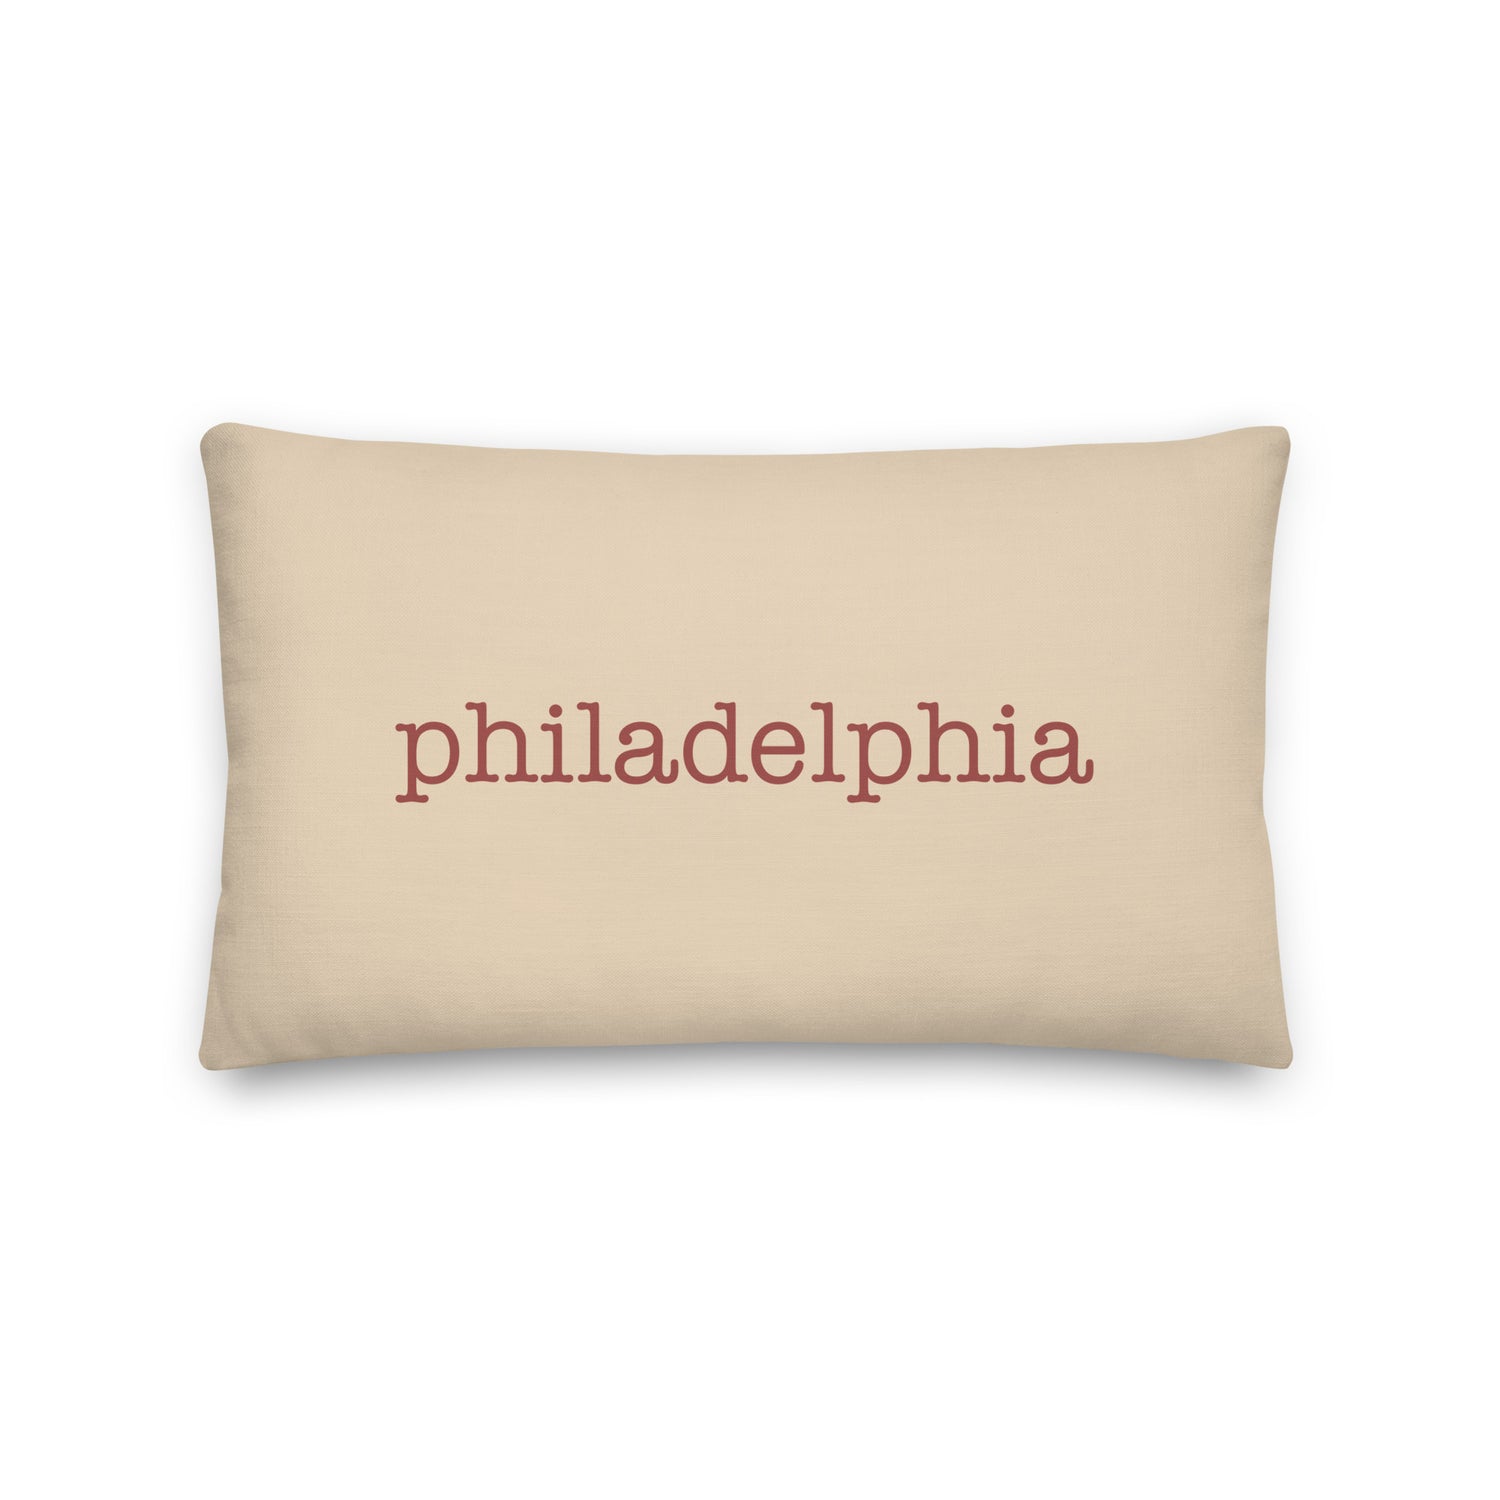 Philadelphia Pennsylvania Pillows and Blankets • PHL Airport Code